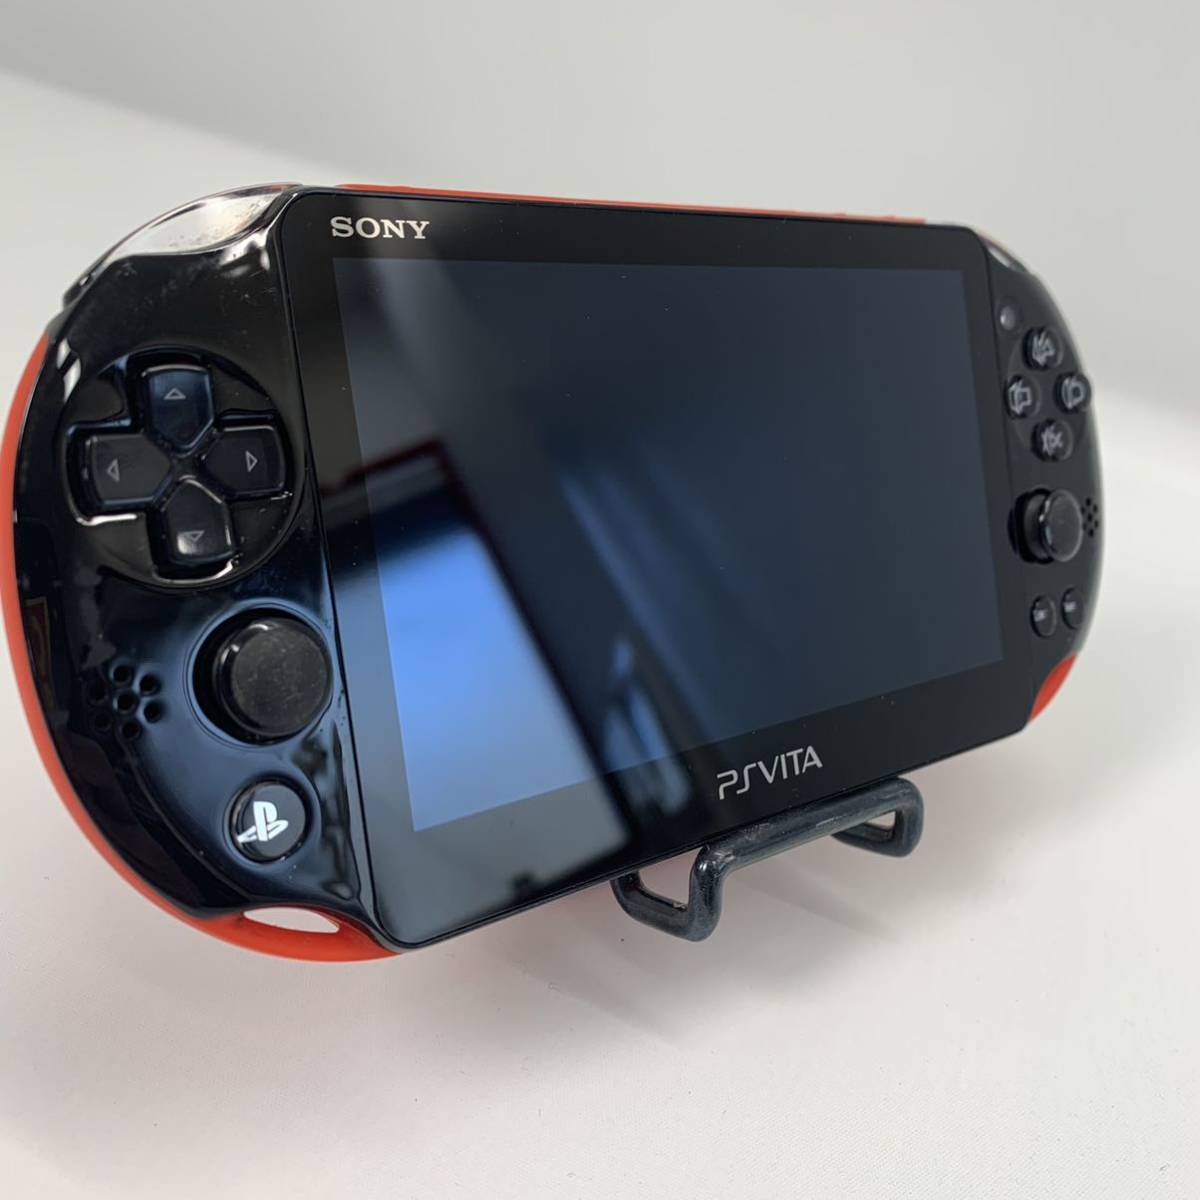 PSVITA PCH-2000 レッドブラック 本体のみ ③ PS Vita ソニー Wi-Fi